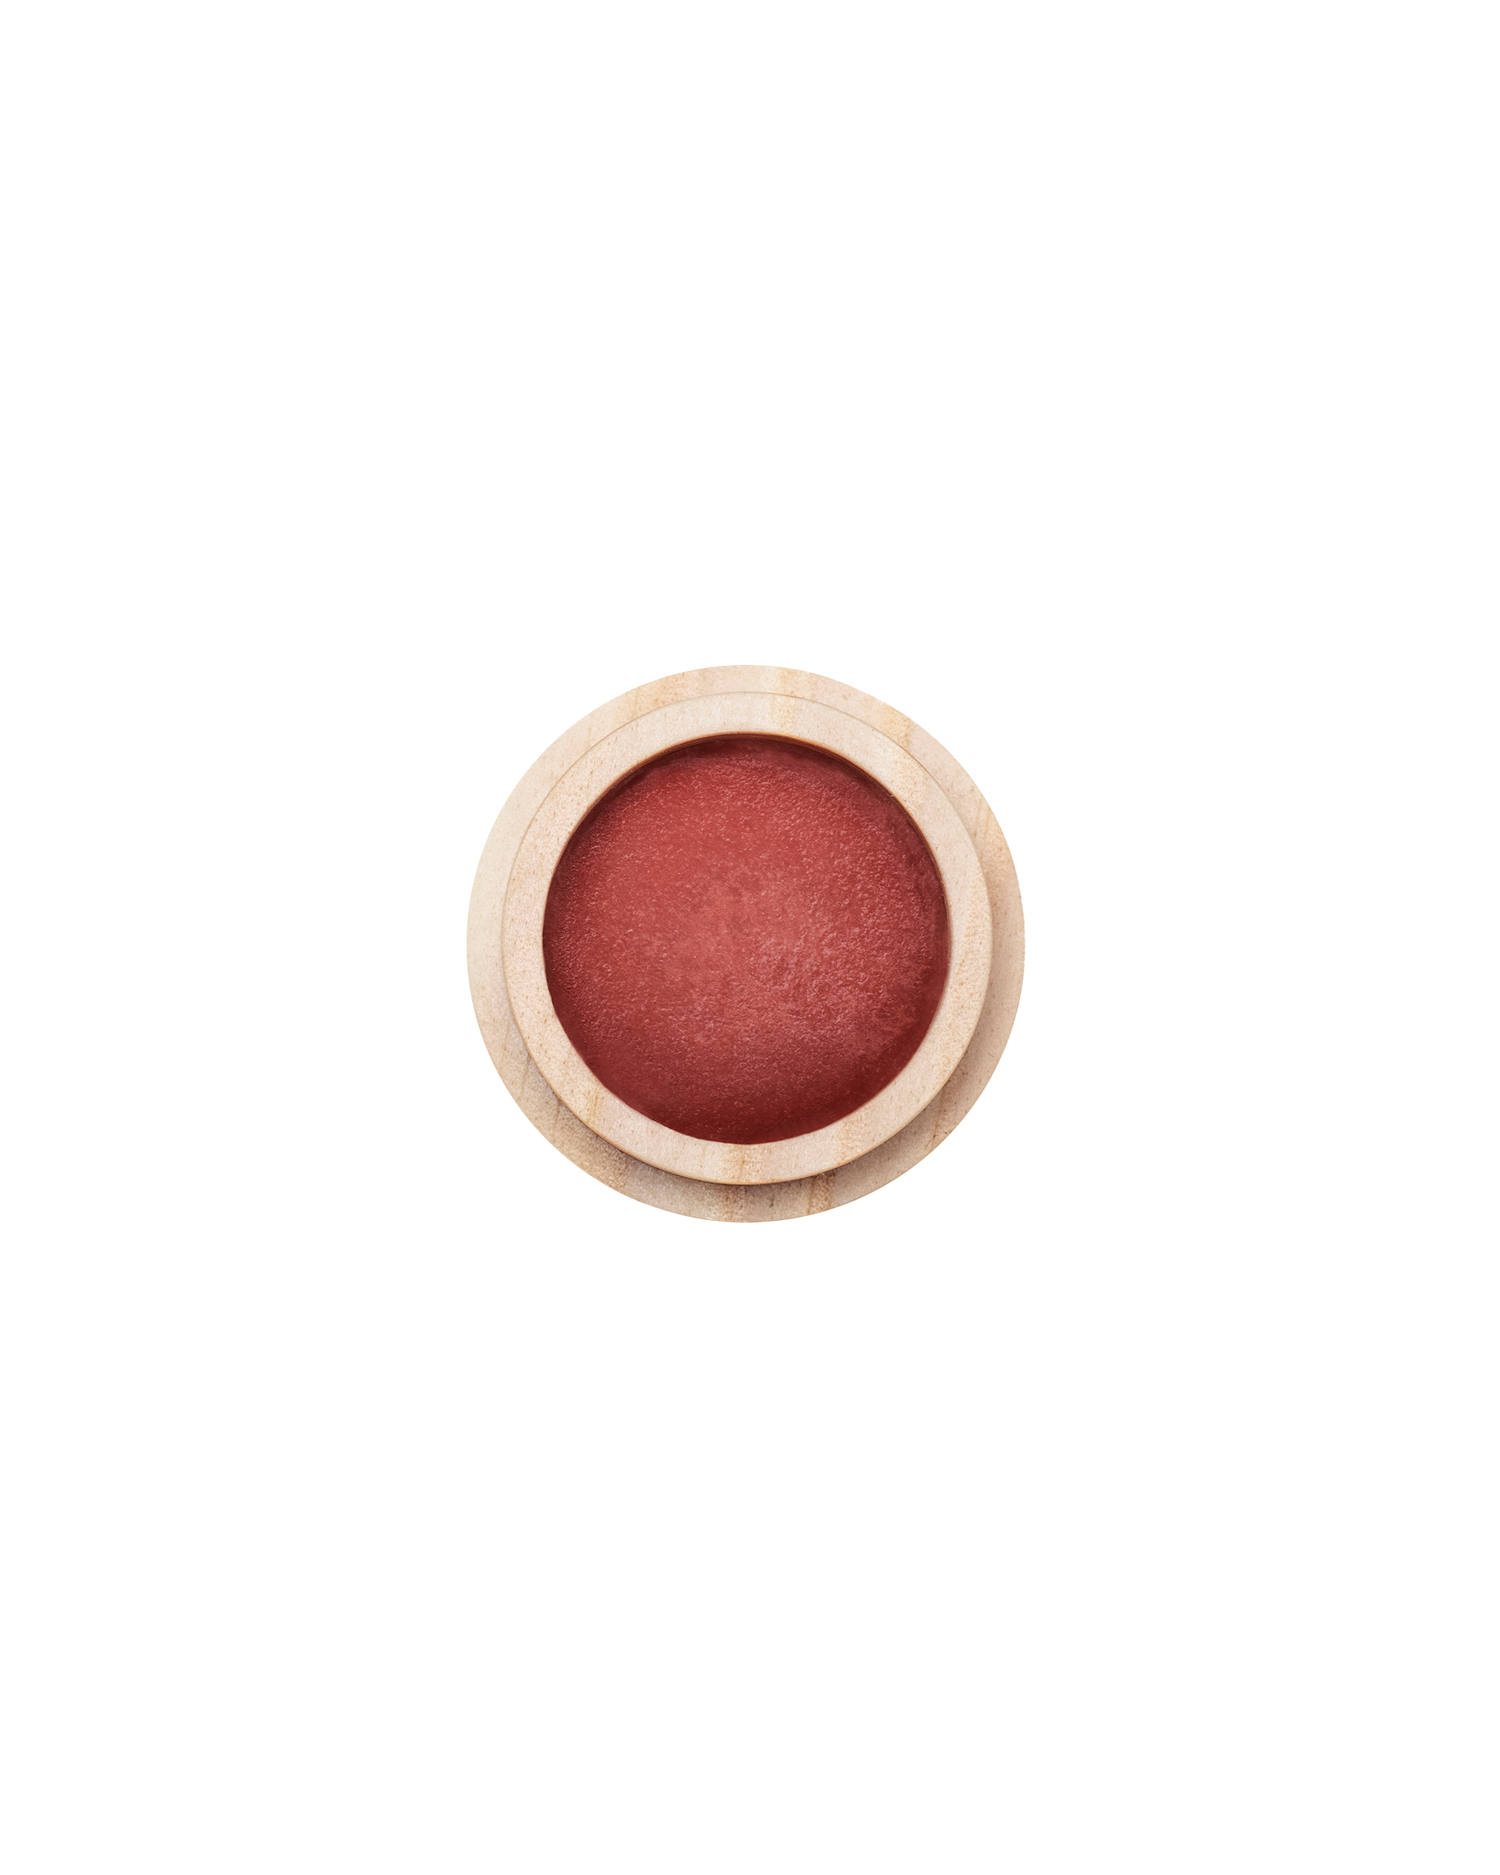 pine-geranium lip balm, pink